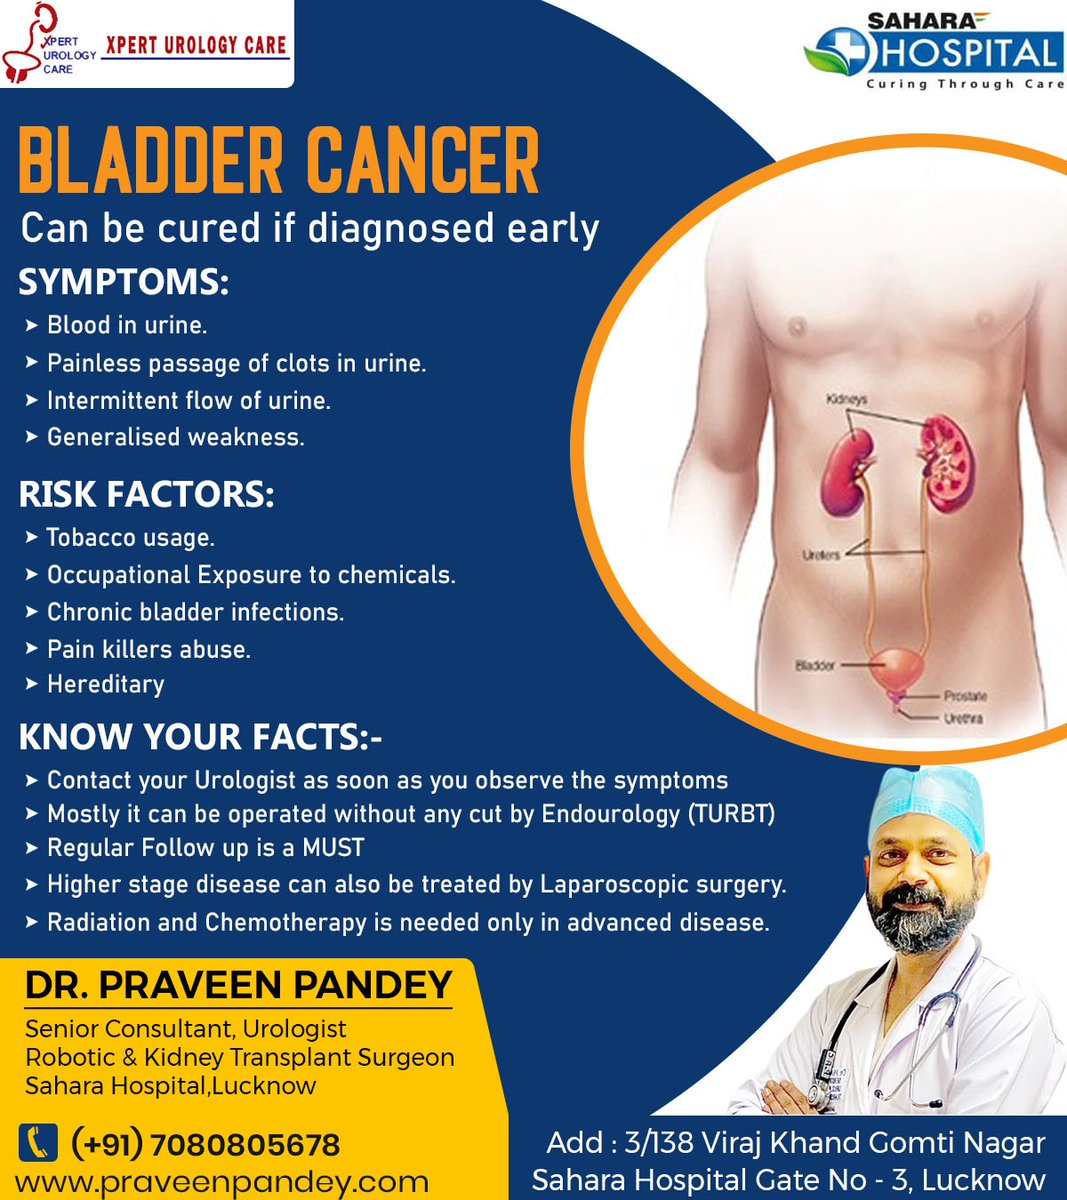 #bladdercancer #BladderCancerAwareness #bladderproblems #Laproscopic#kidneytransplant #roboticsurgery #bladdercancerawareness #bladdercancer Dr. Praveen Pandey Senior Consultant, Urologist (Robotic & Kidney Transplant Surgeon) Xpert Urology Care, Opp SAHARA HOSPITAL, Gate No. 3